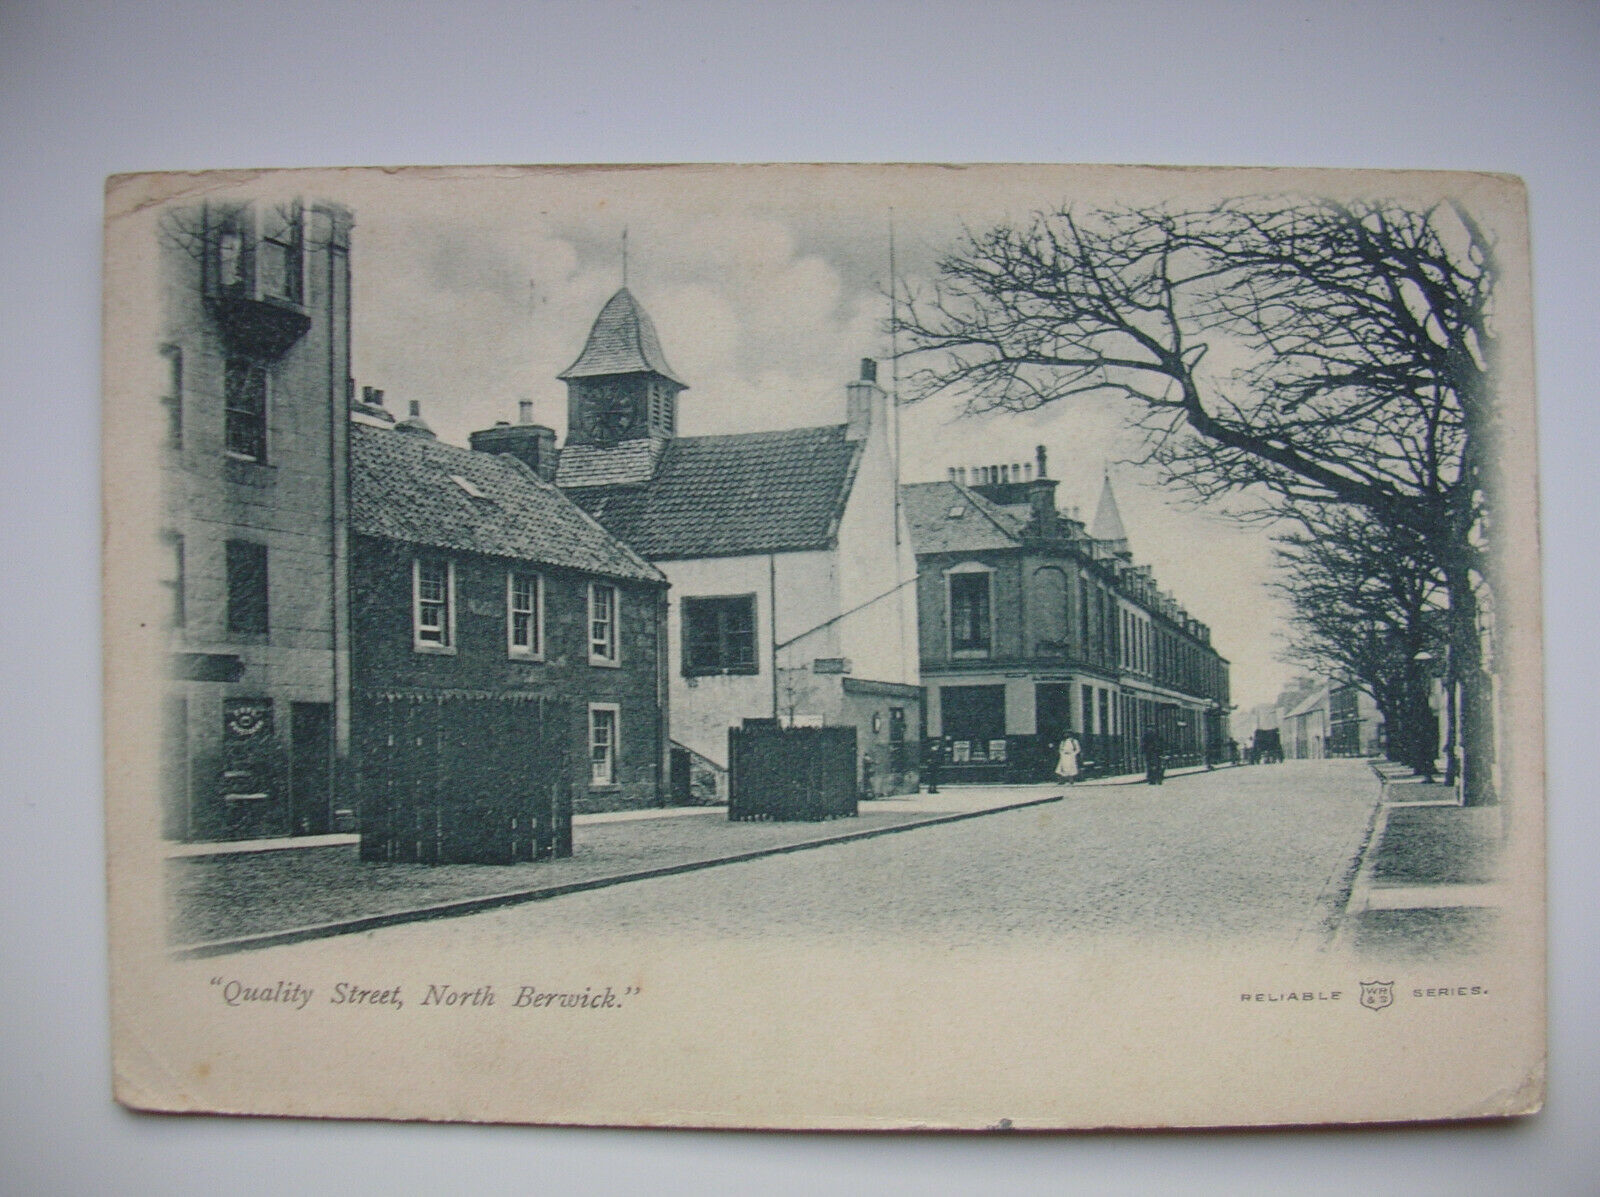 House Clearance - North Berwick – Quality Street. Near Dunbar, Gullane etc. (1924 - Reliable)